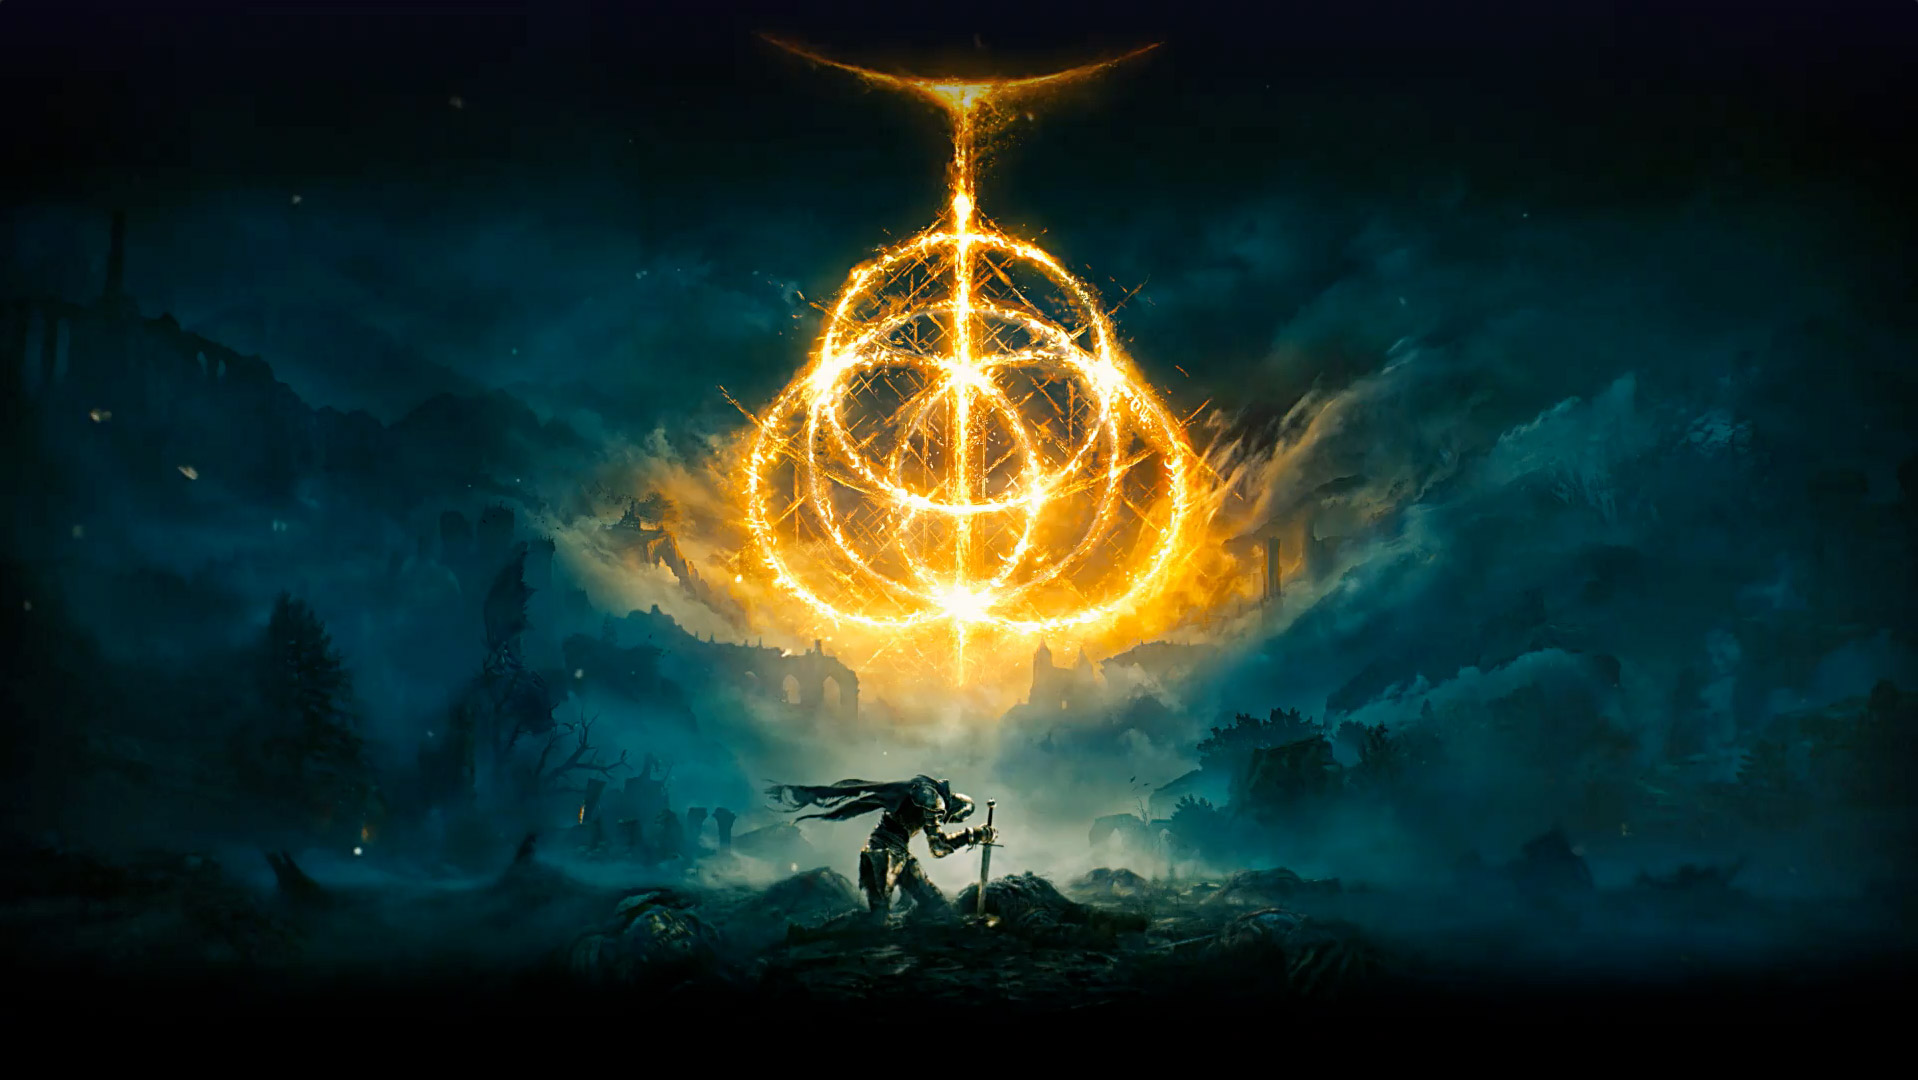 Elden Ring. Πολλοί φλεγόμενοι κύκλοι που δημιουργούν το σύμβολο του Elden Ring. Χαρακτήρας ιππότης με το σπαθί του στο έδαφος σε μια έρημη περιοχή με ομίχλη.